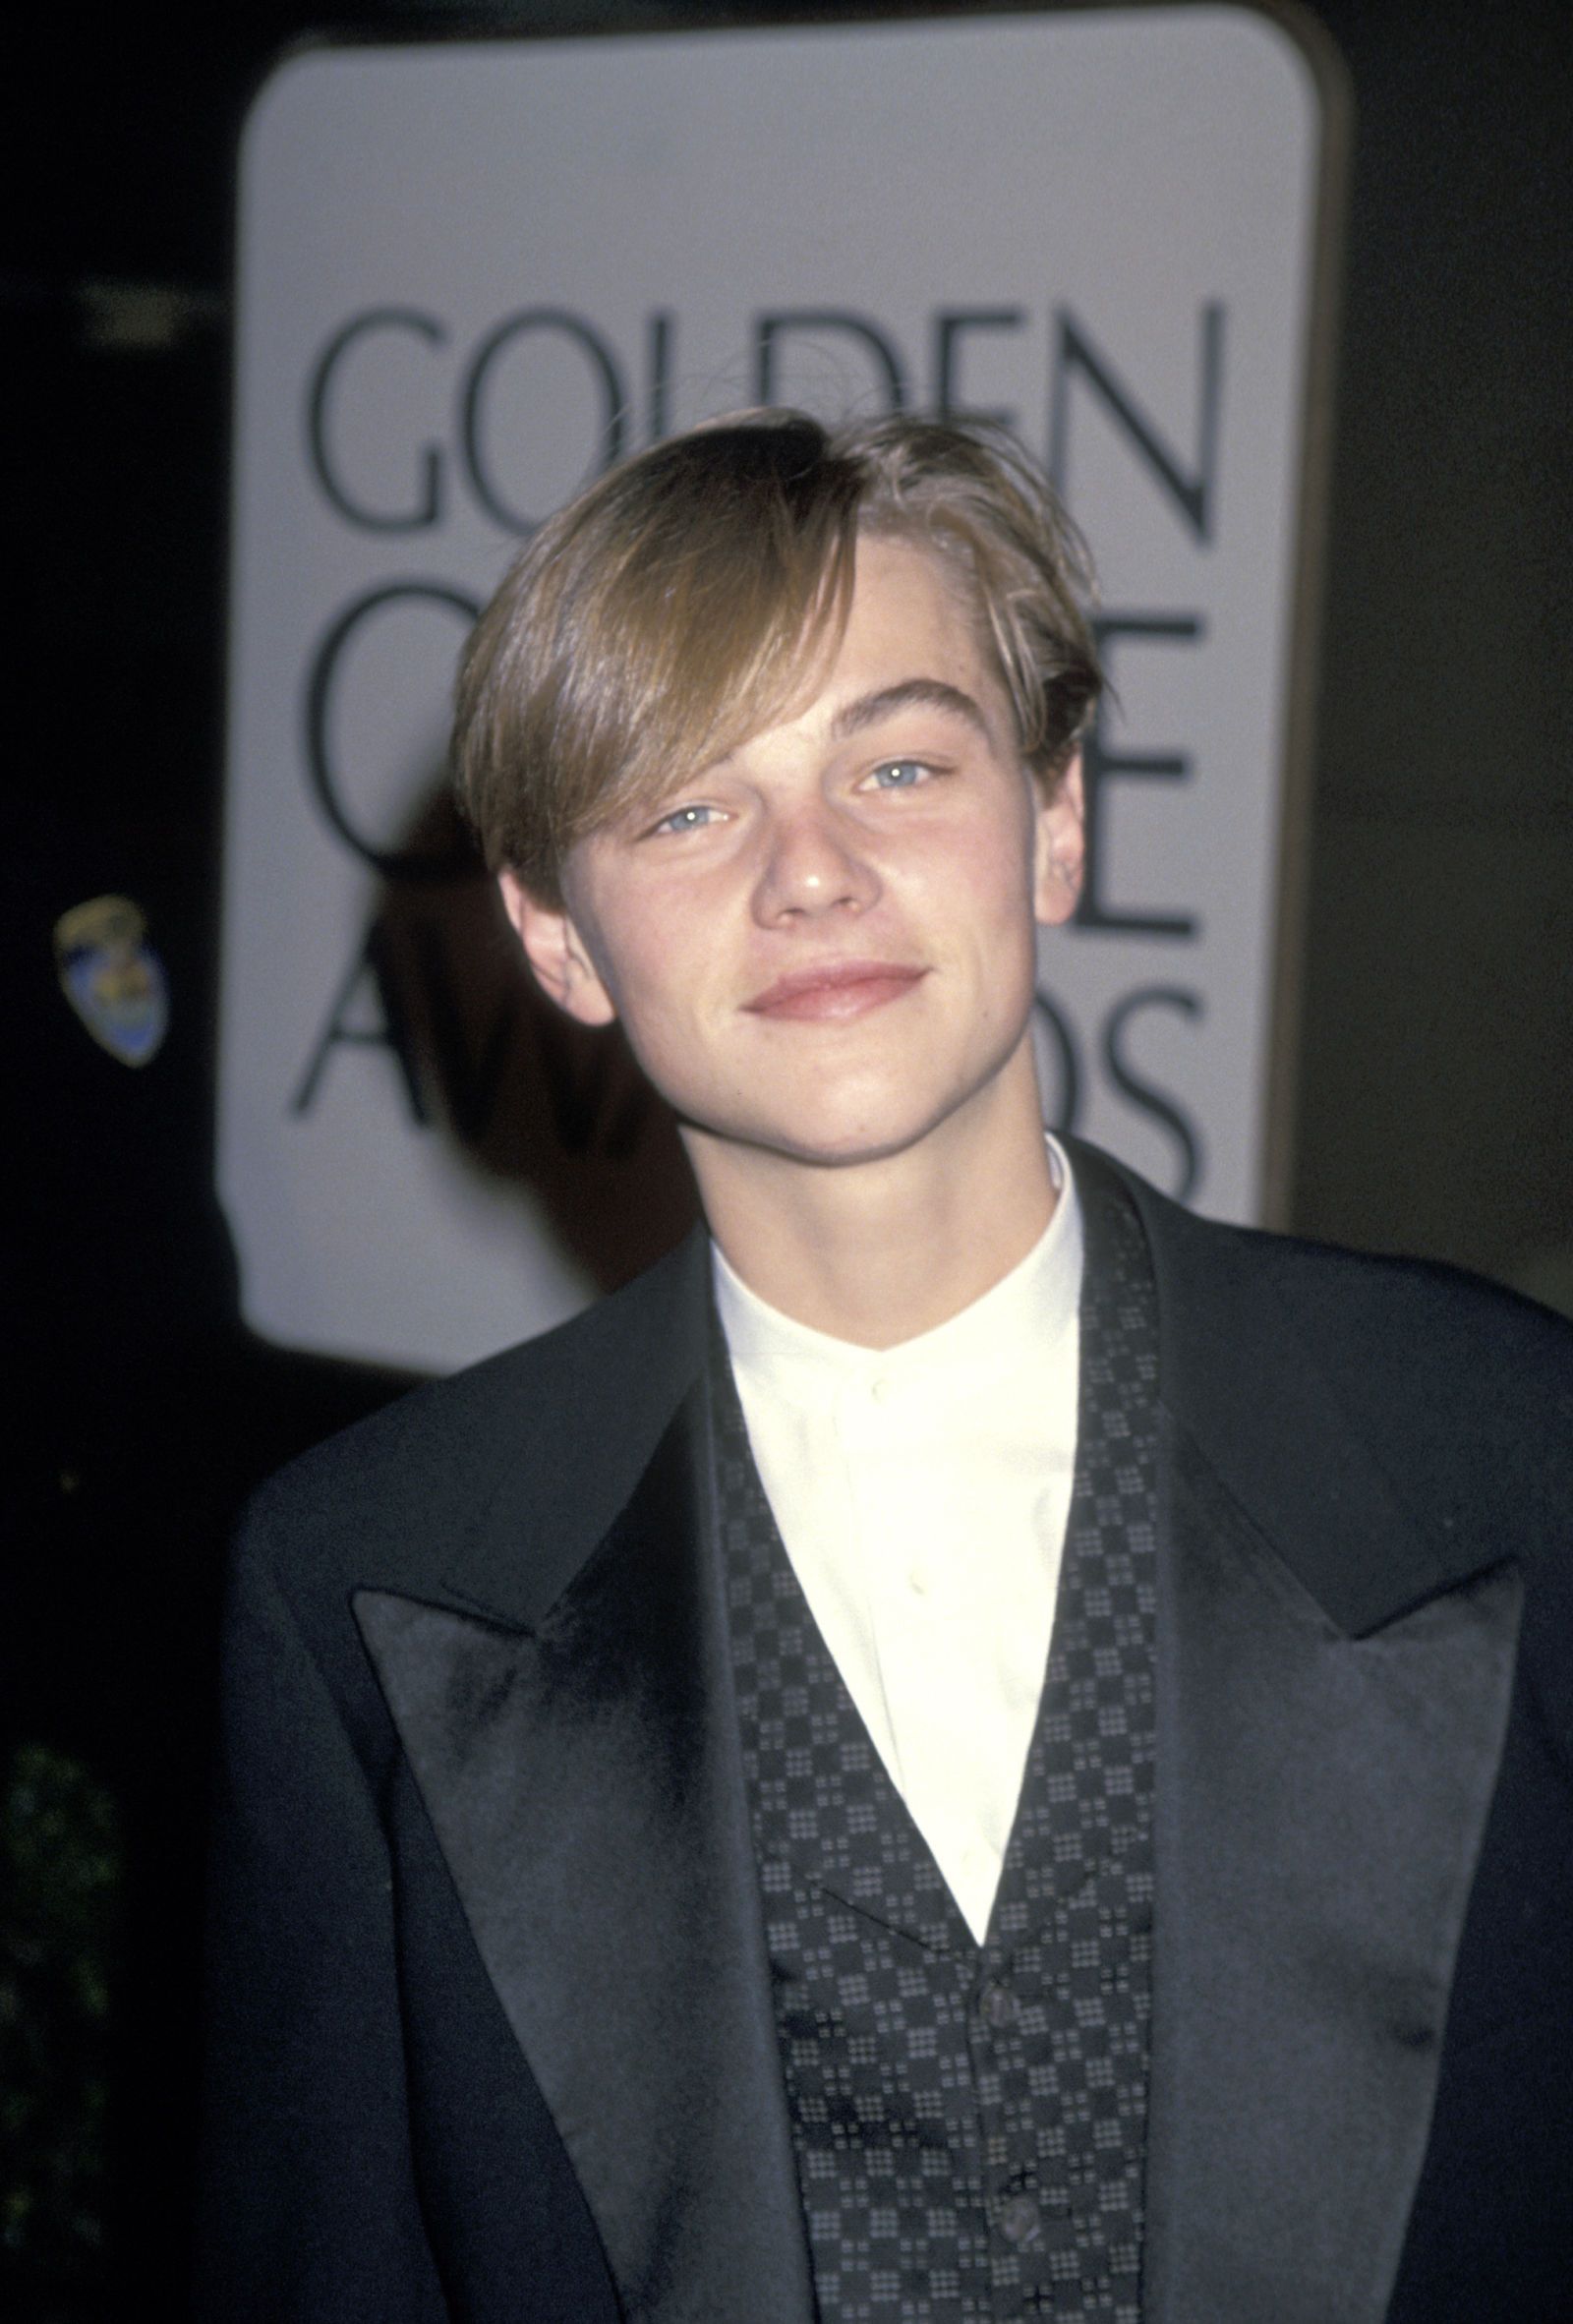 Leonardo DiCaprio hairstyles, haircuts and hair